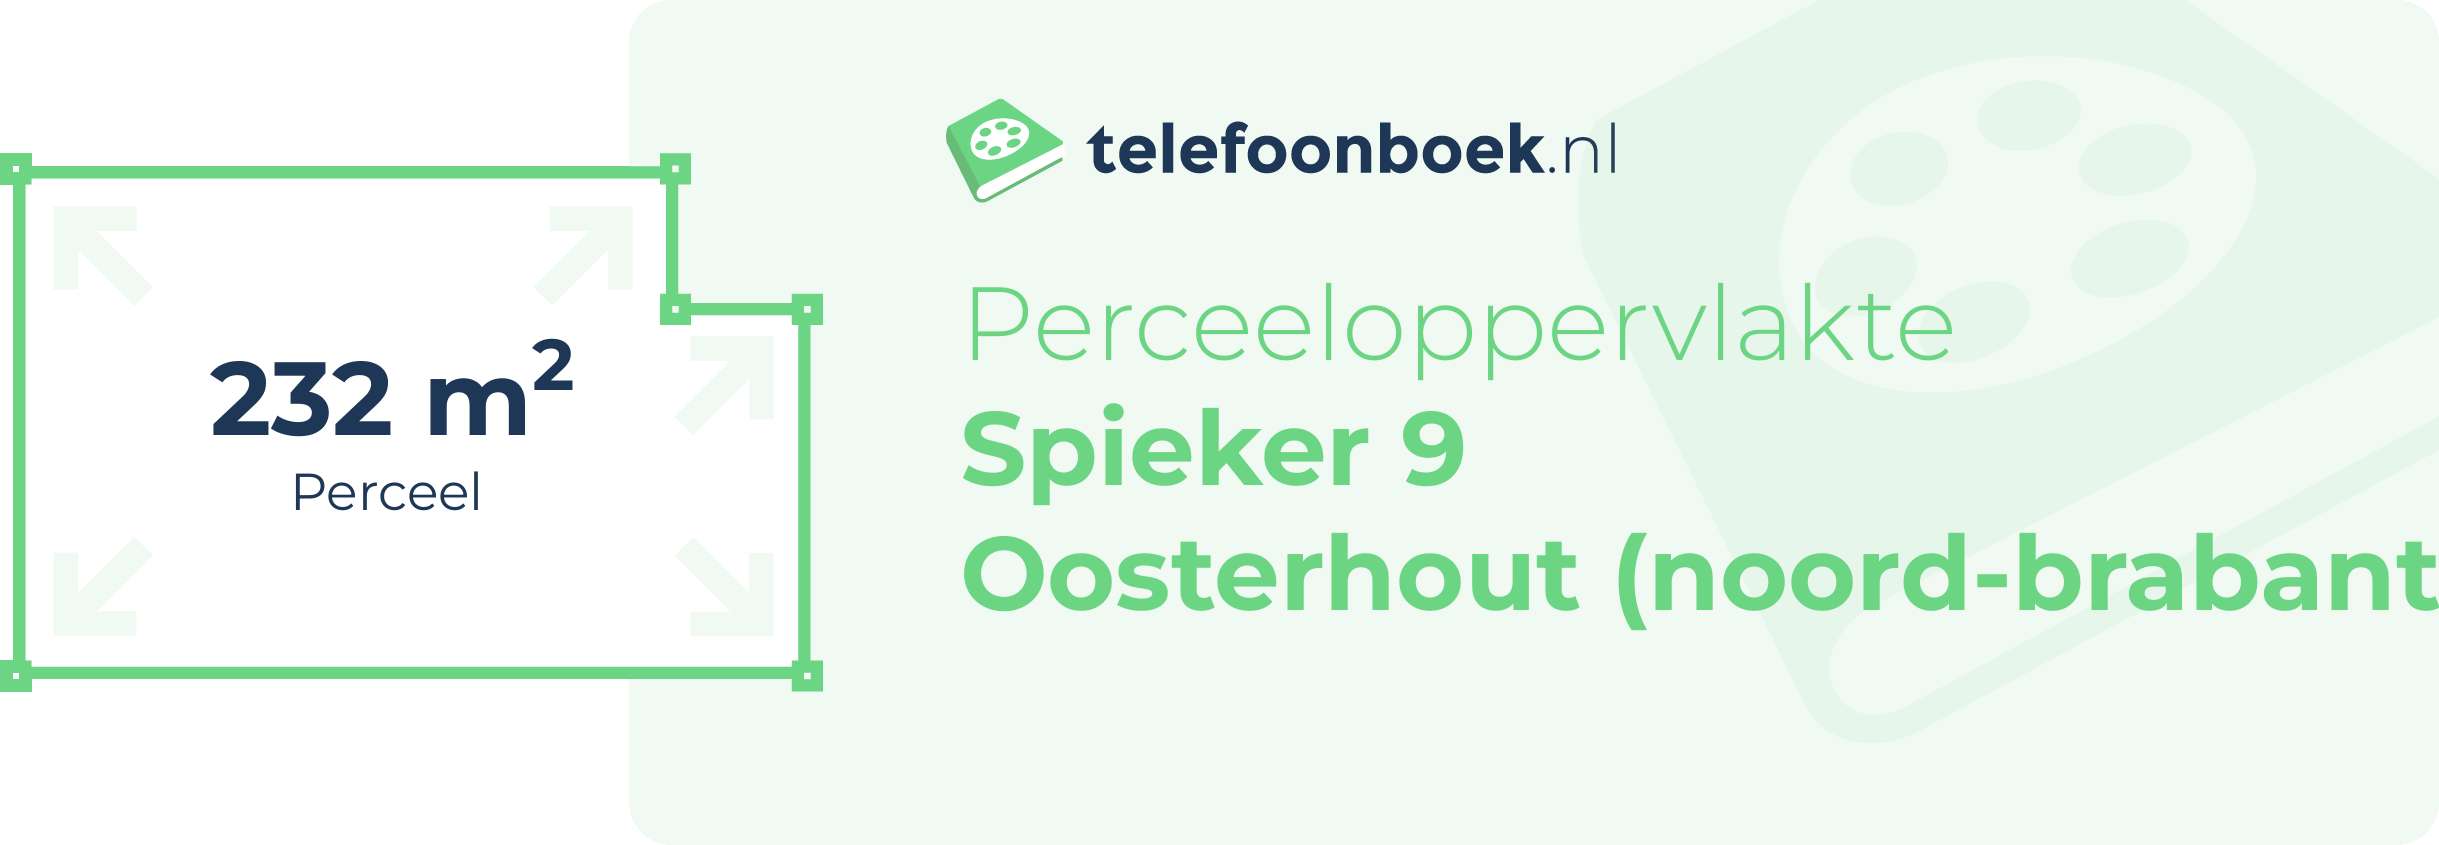 Perceeloppervlakte Spieker 9 Oosterhout (Noord-Brabant)